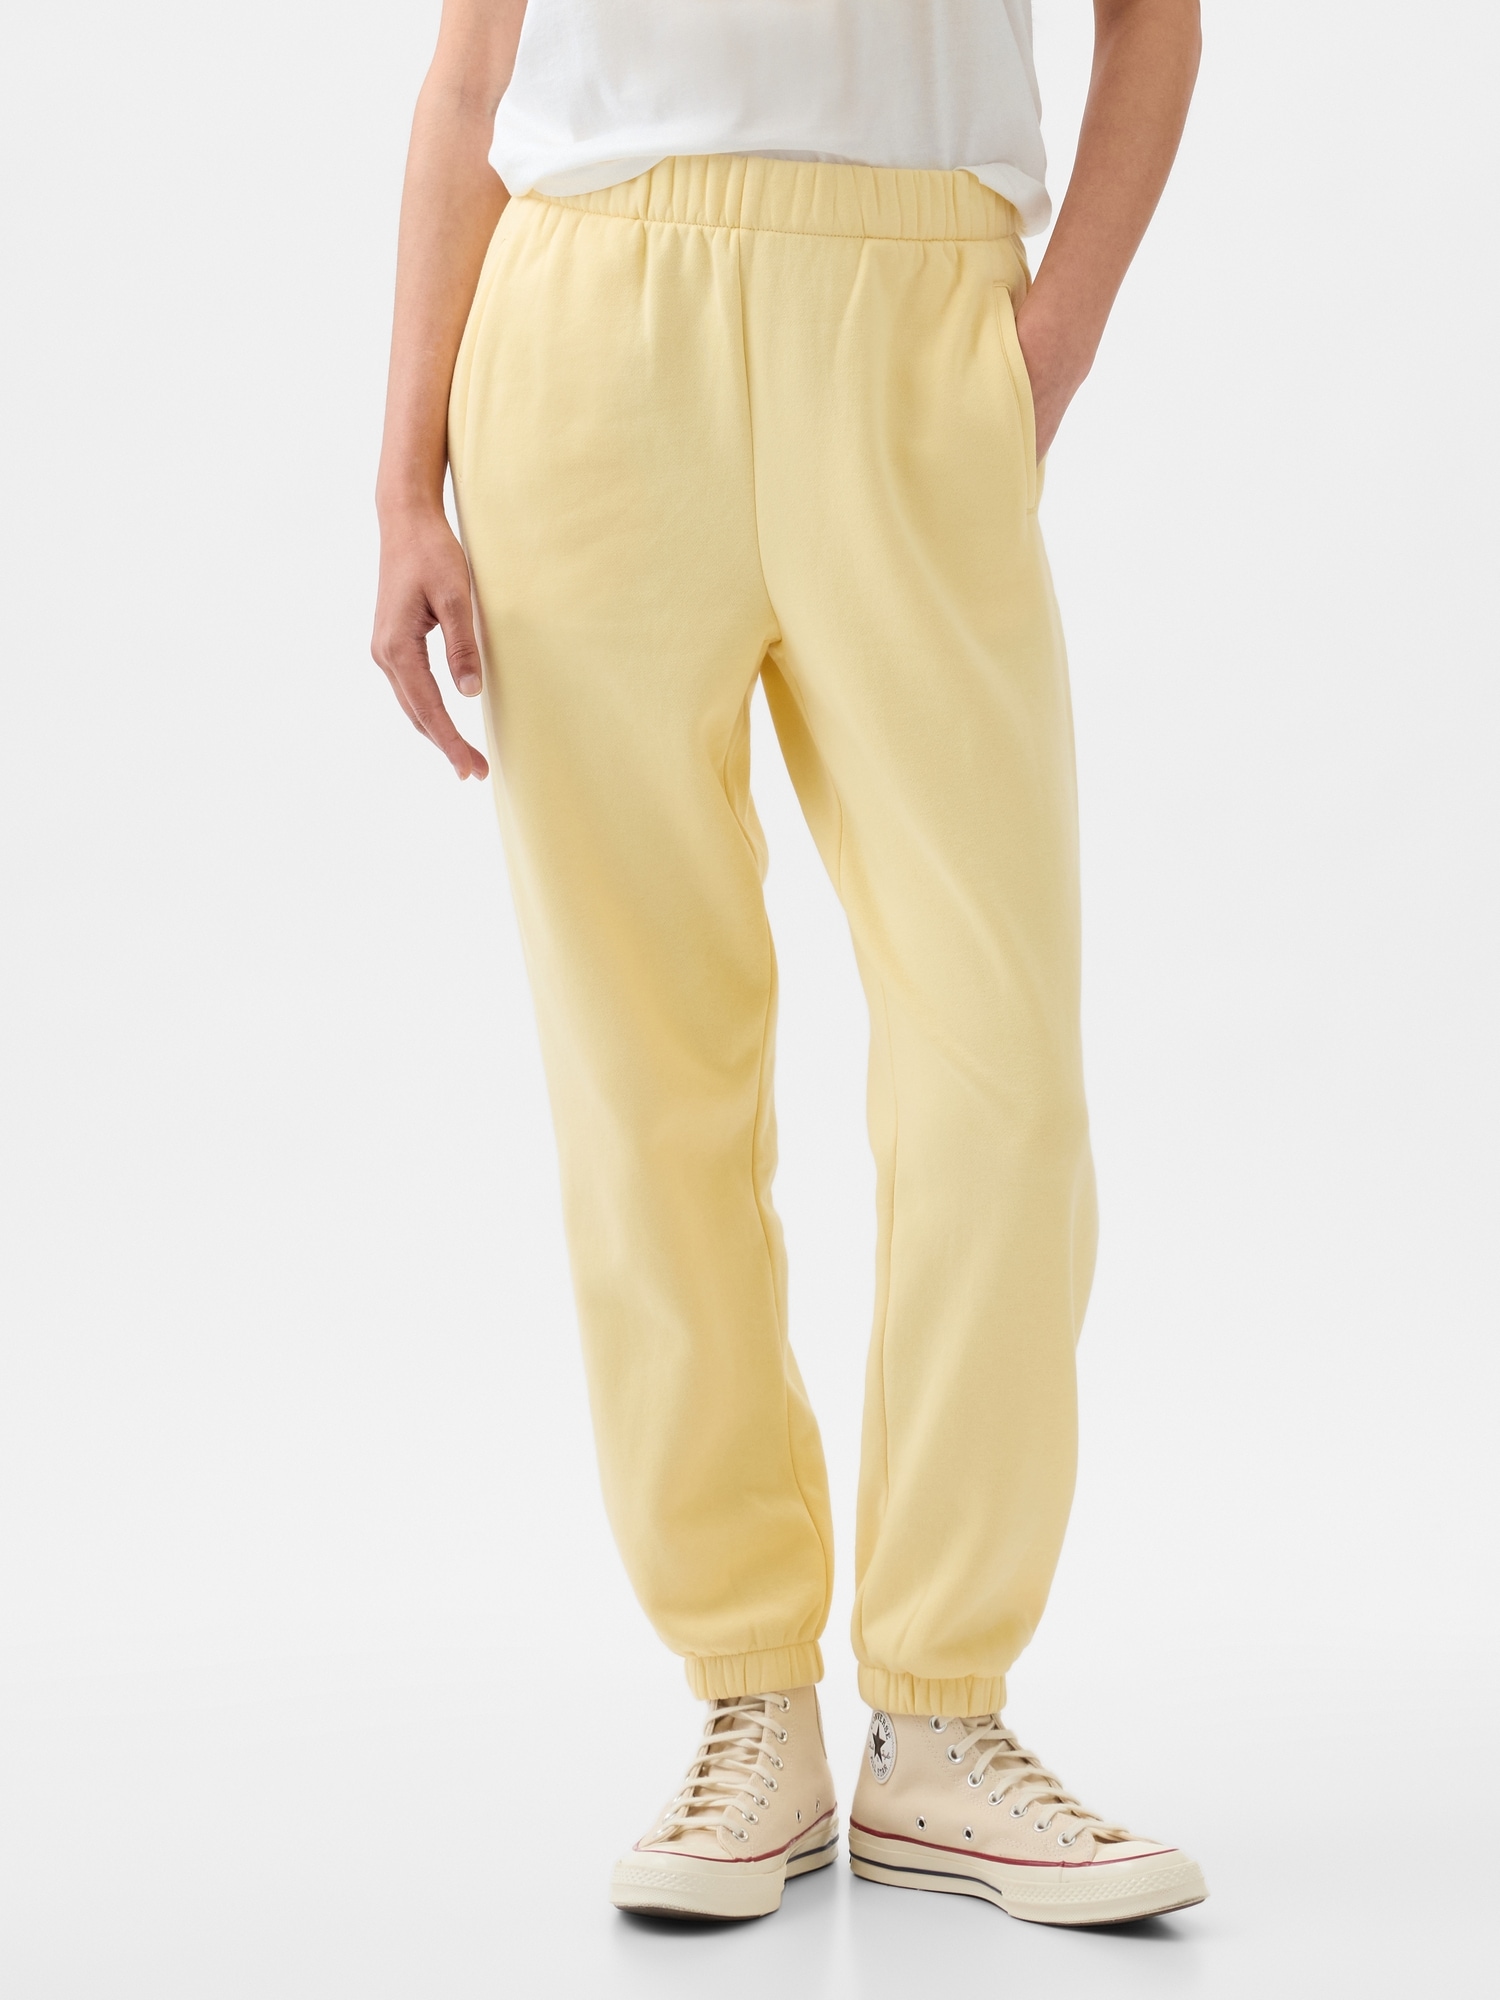 Gap GapBody Women's Drawstring-Waist Jogger Pajama Pants